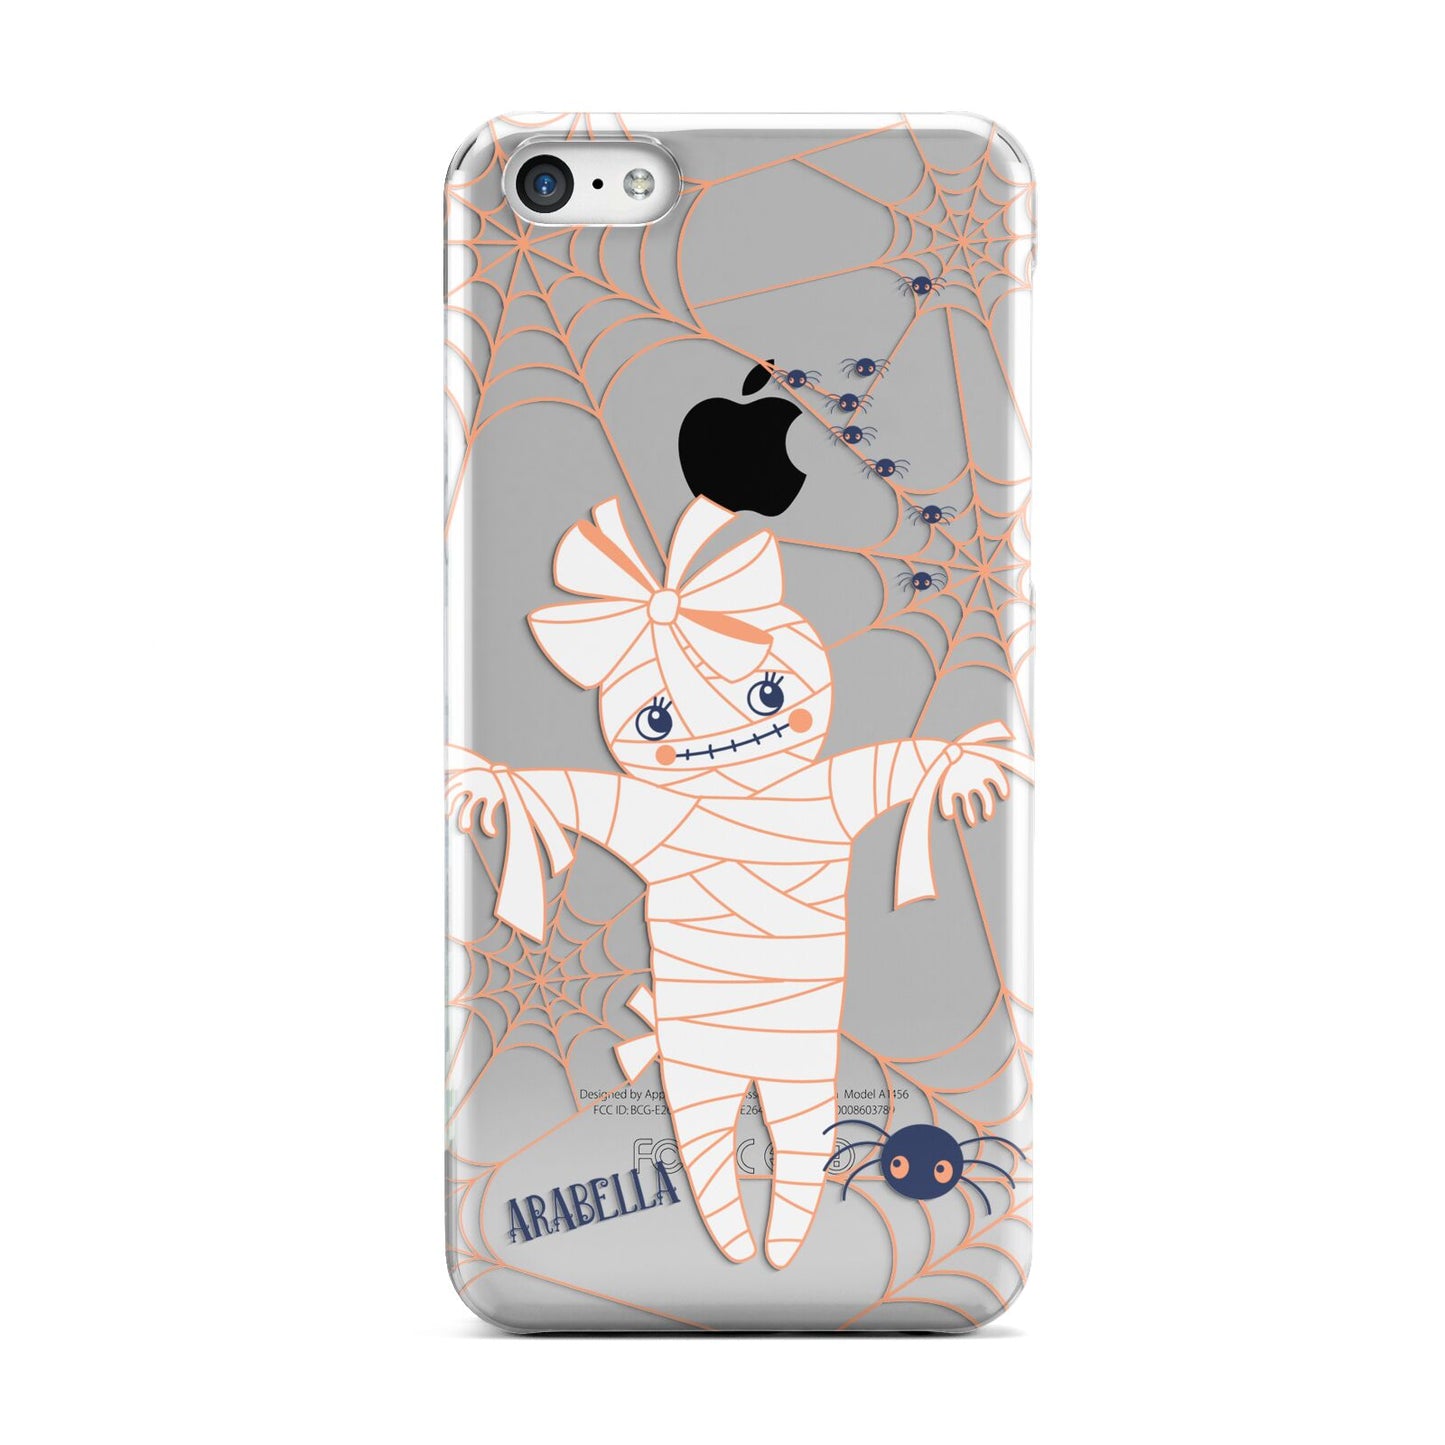 Mummy Halloween Apple iPhone 5c Case